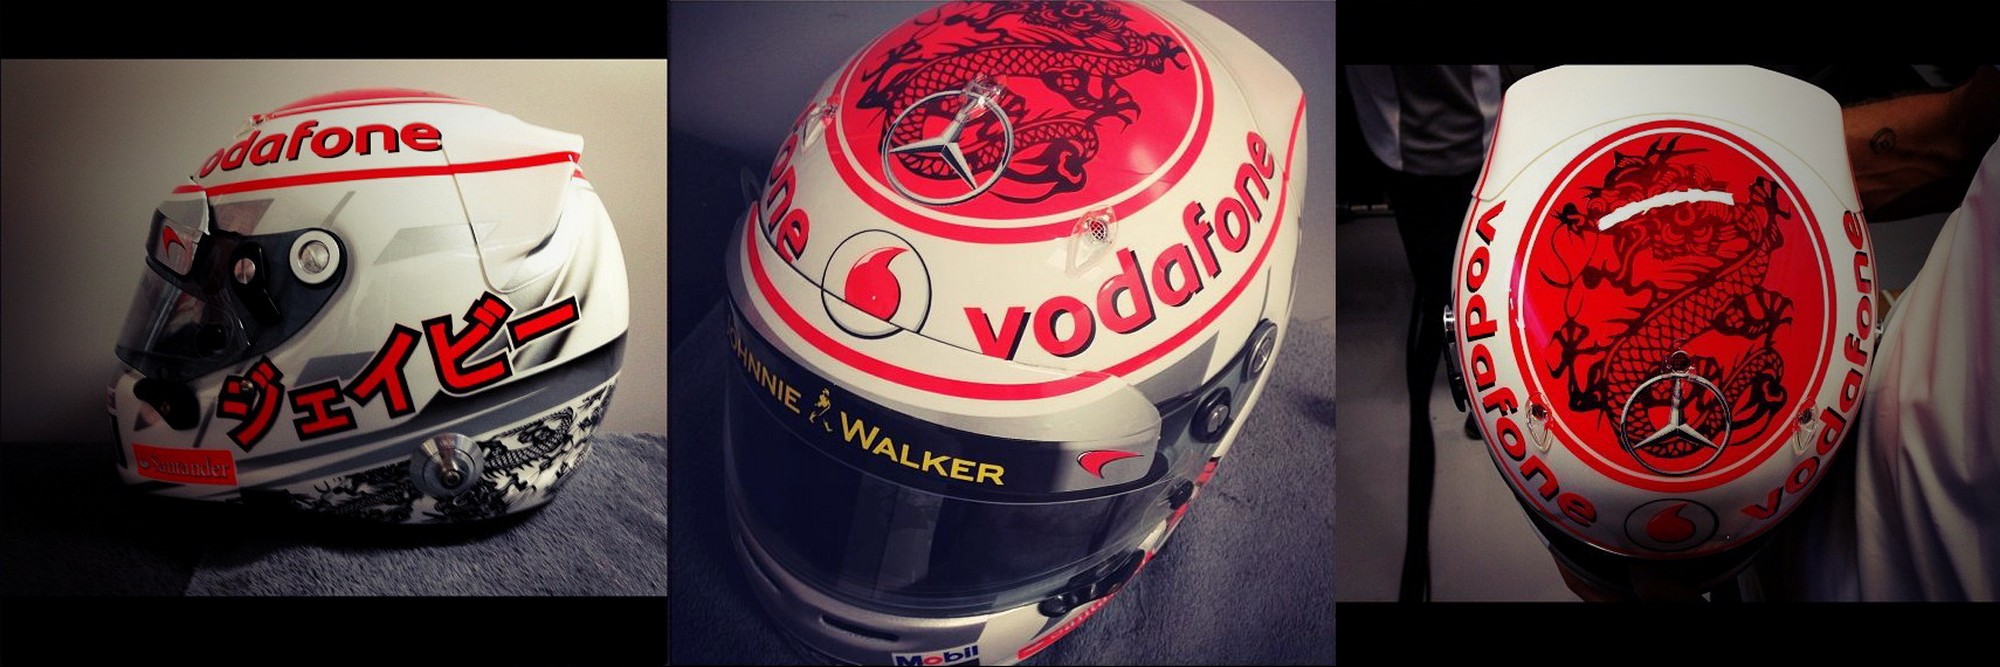 Шлем Дженсона Баттона на Гран-При Японии 2012 | 2012 Japanese Grand Prix helmet of Jenson Button